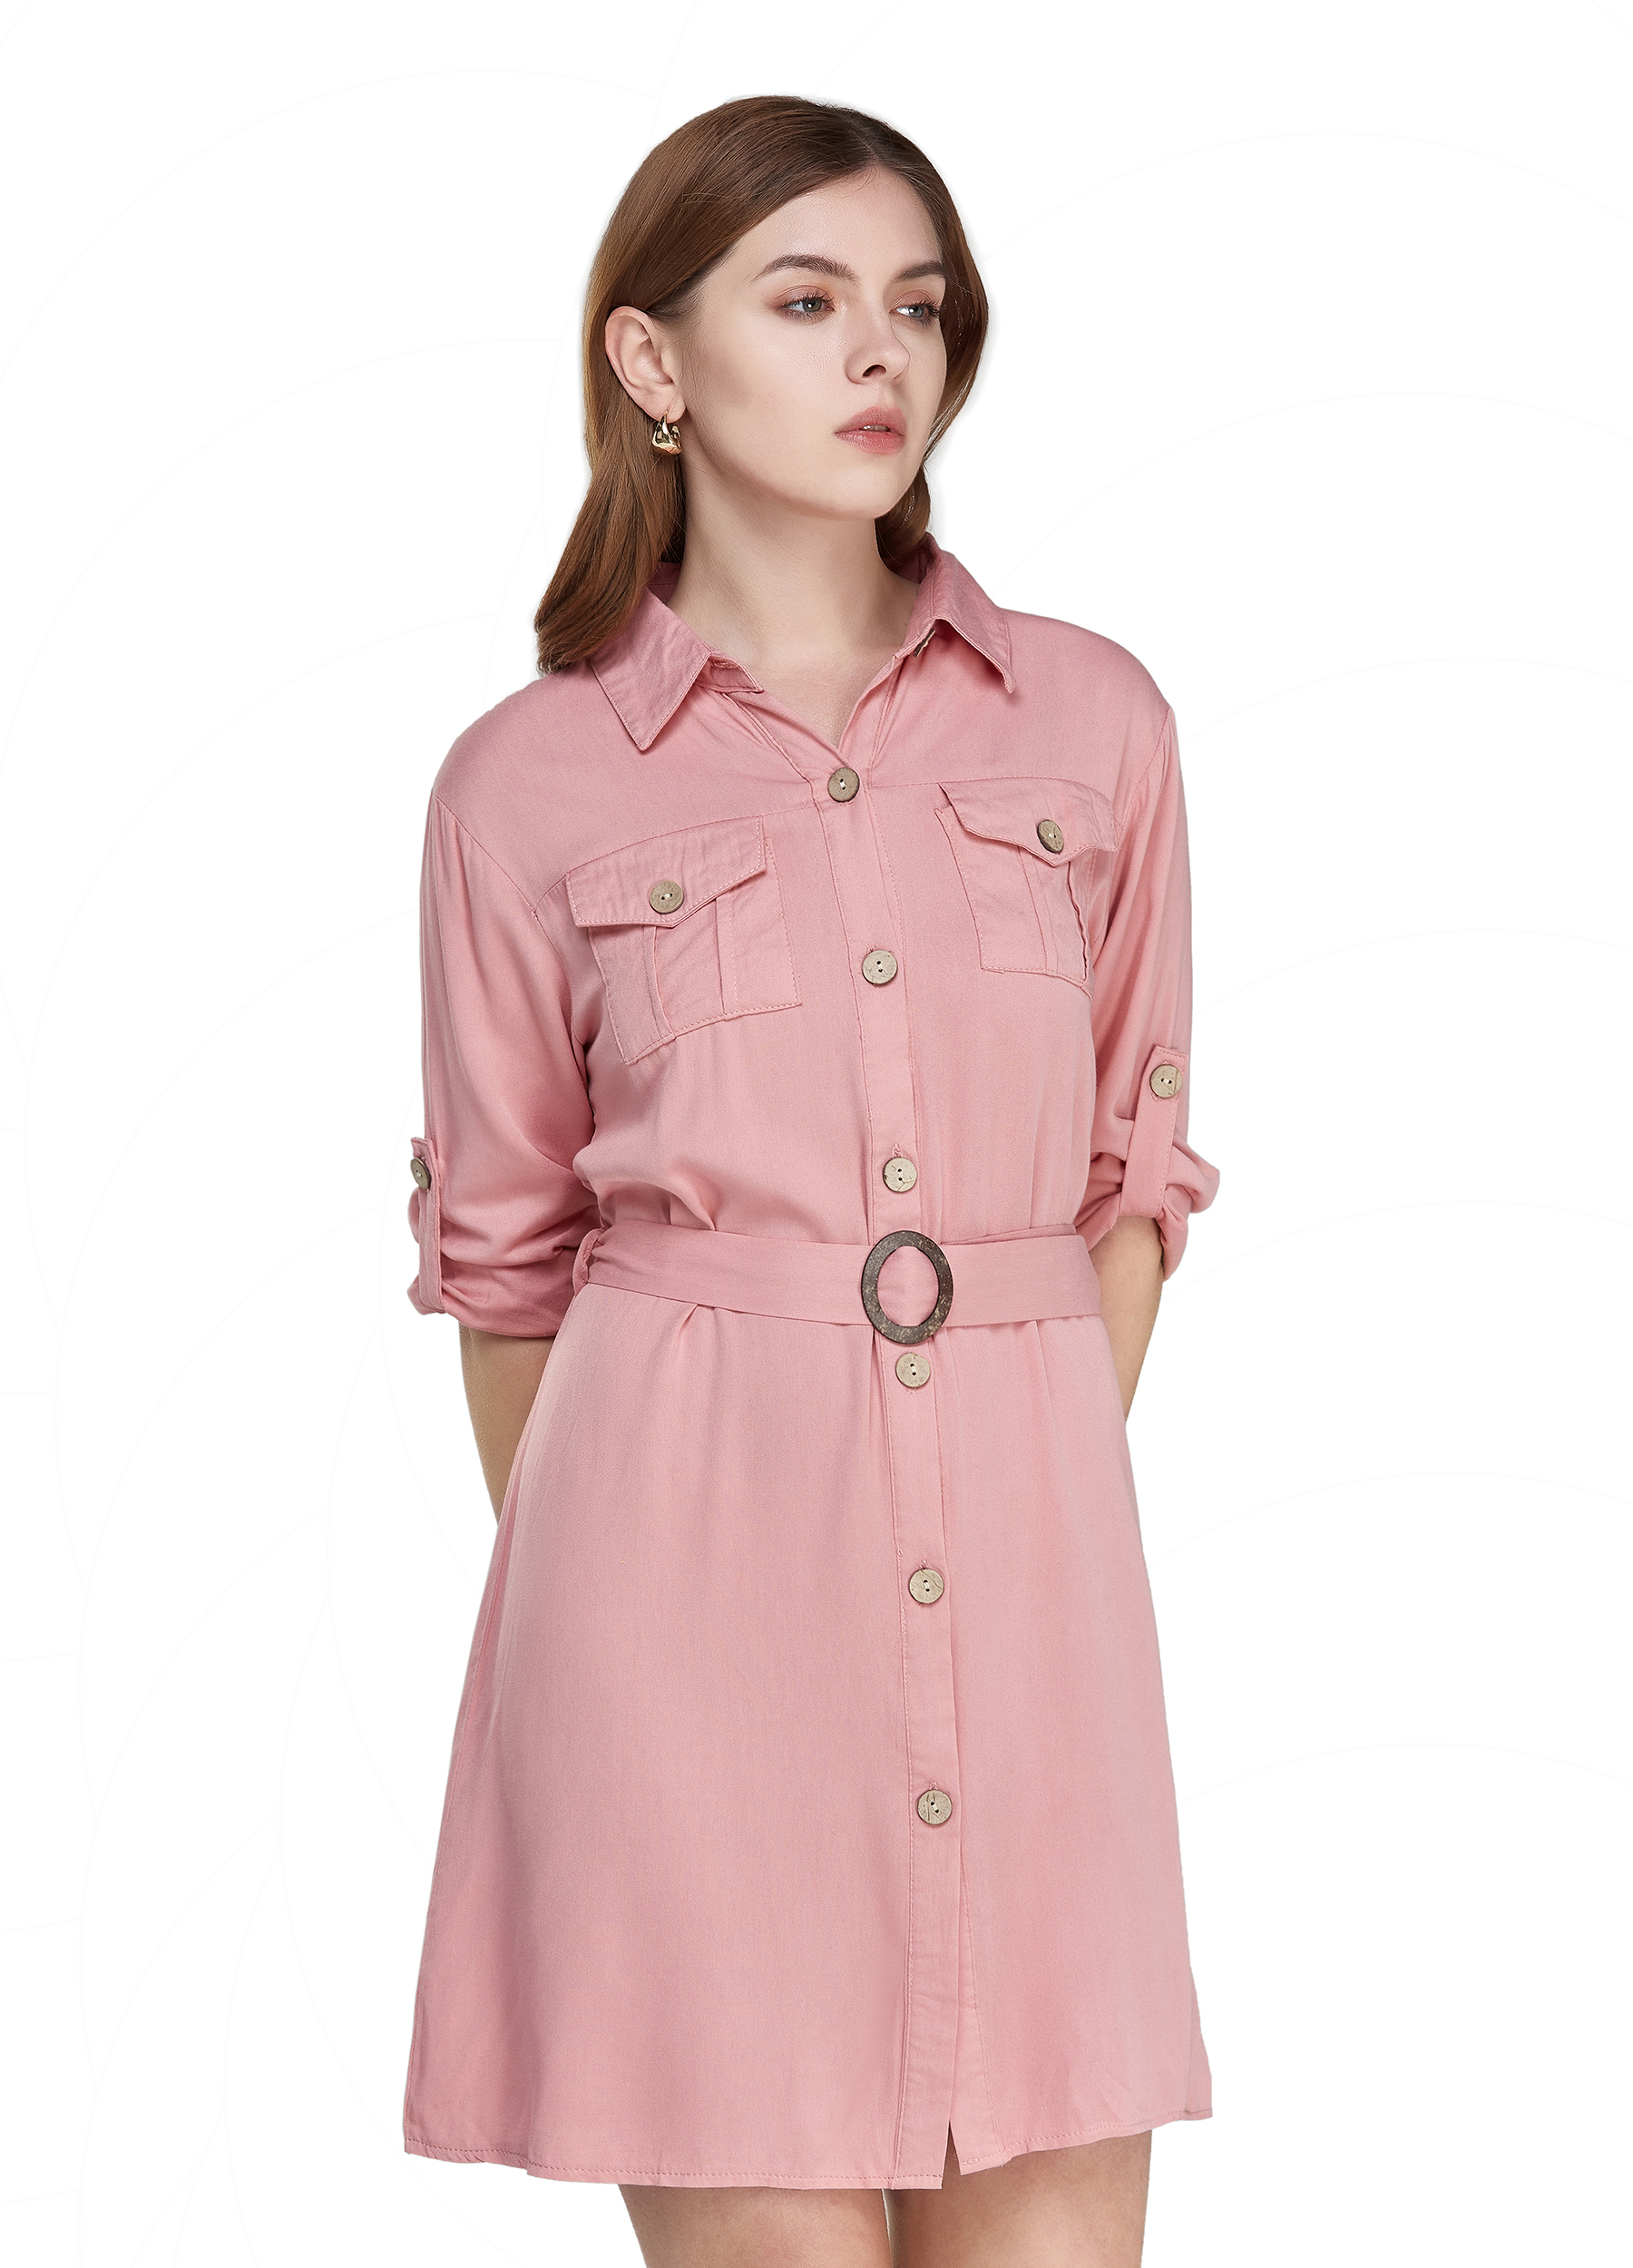 MECALA Women 3/4 Long Sleeve Button Down Shirt Dress Casual Midi Dress Pink L - image 5 of 10